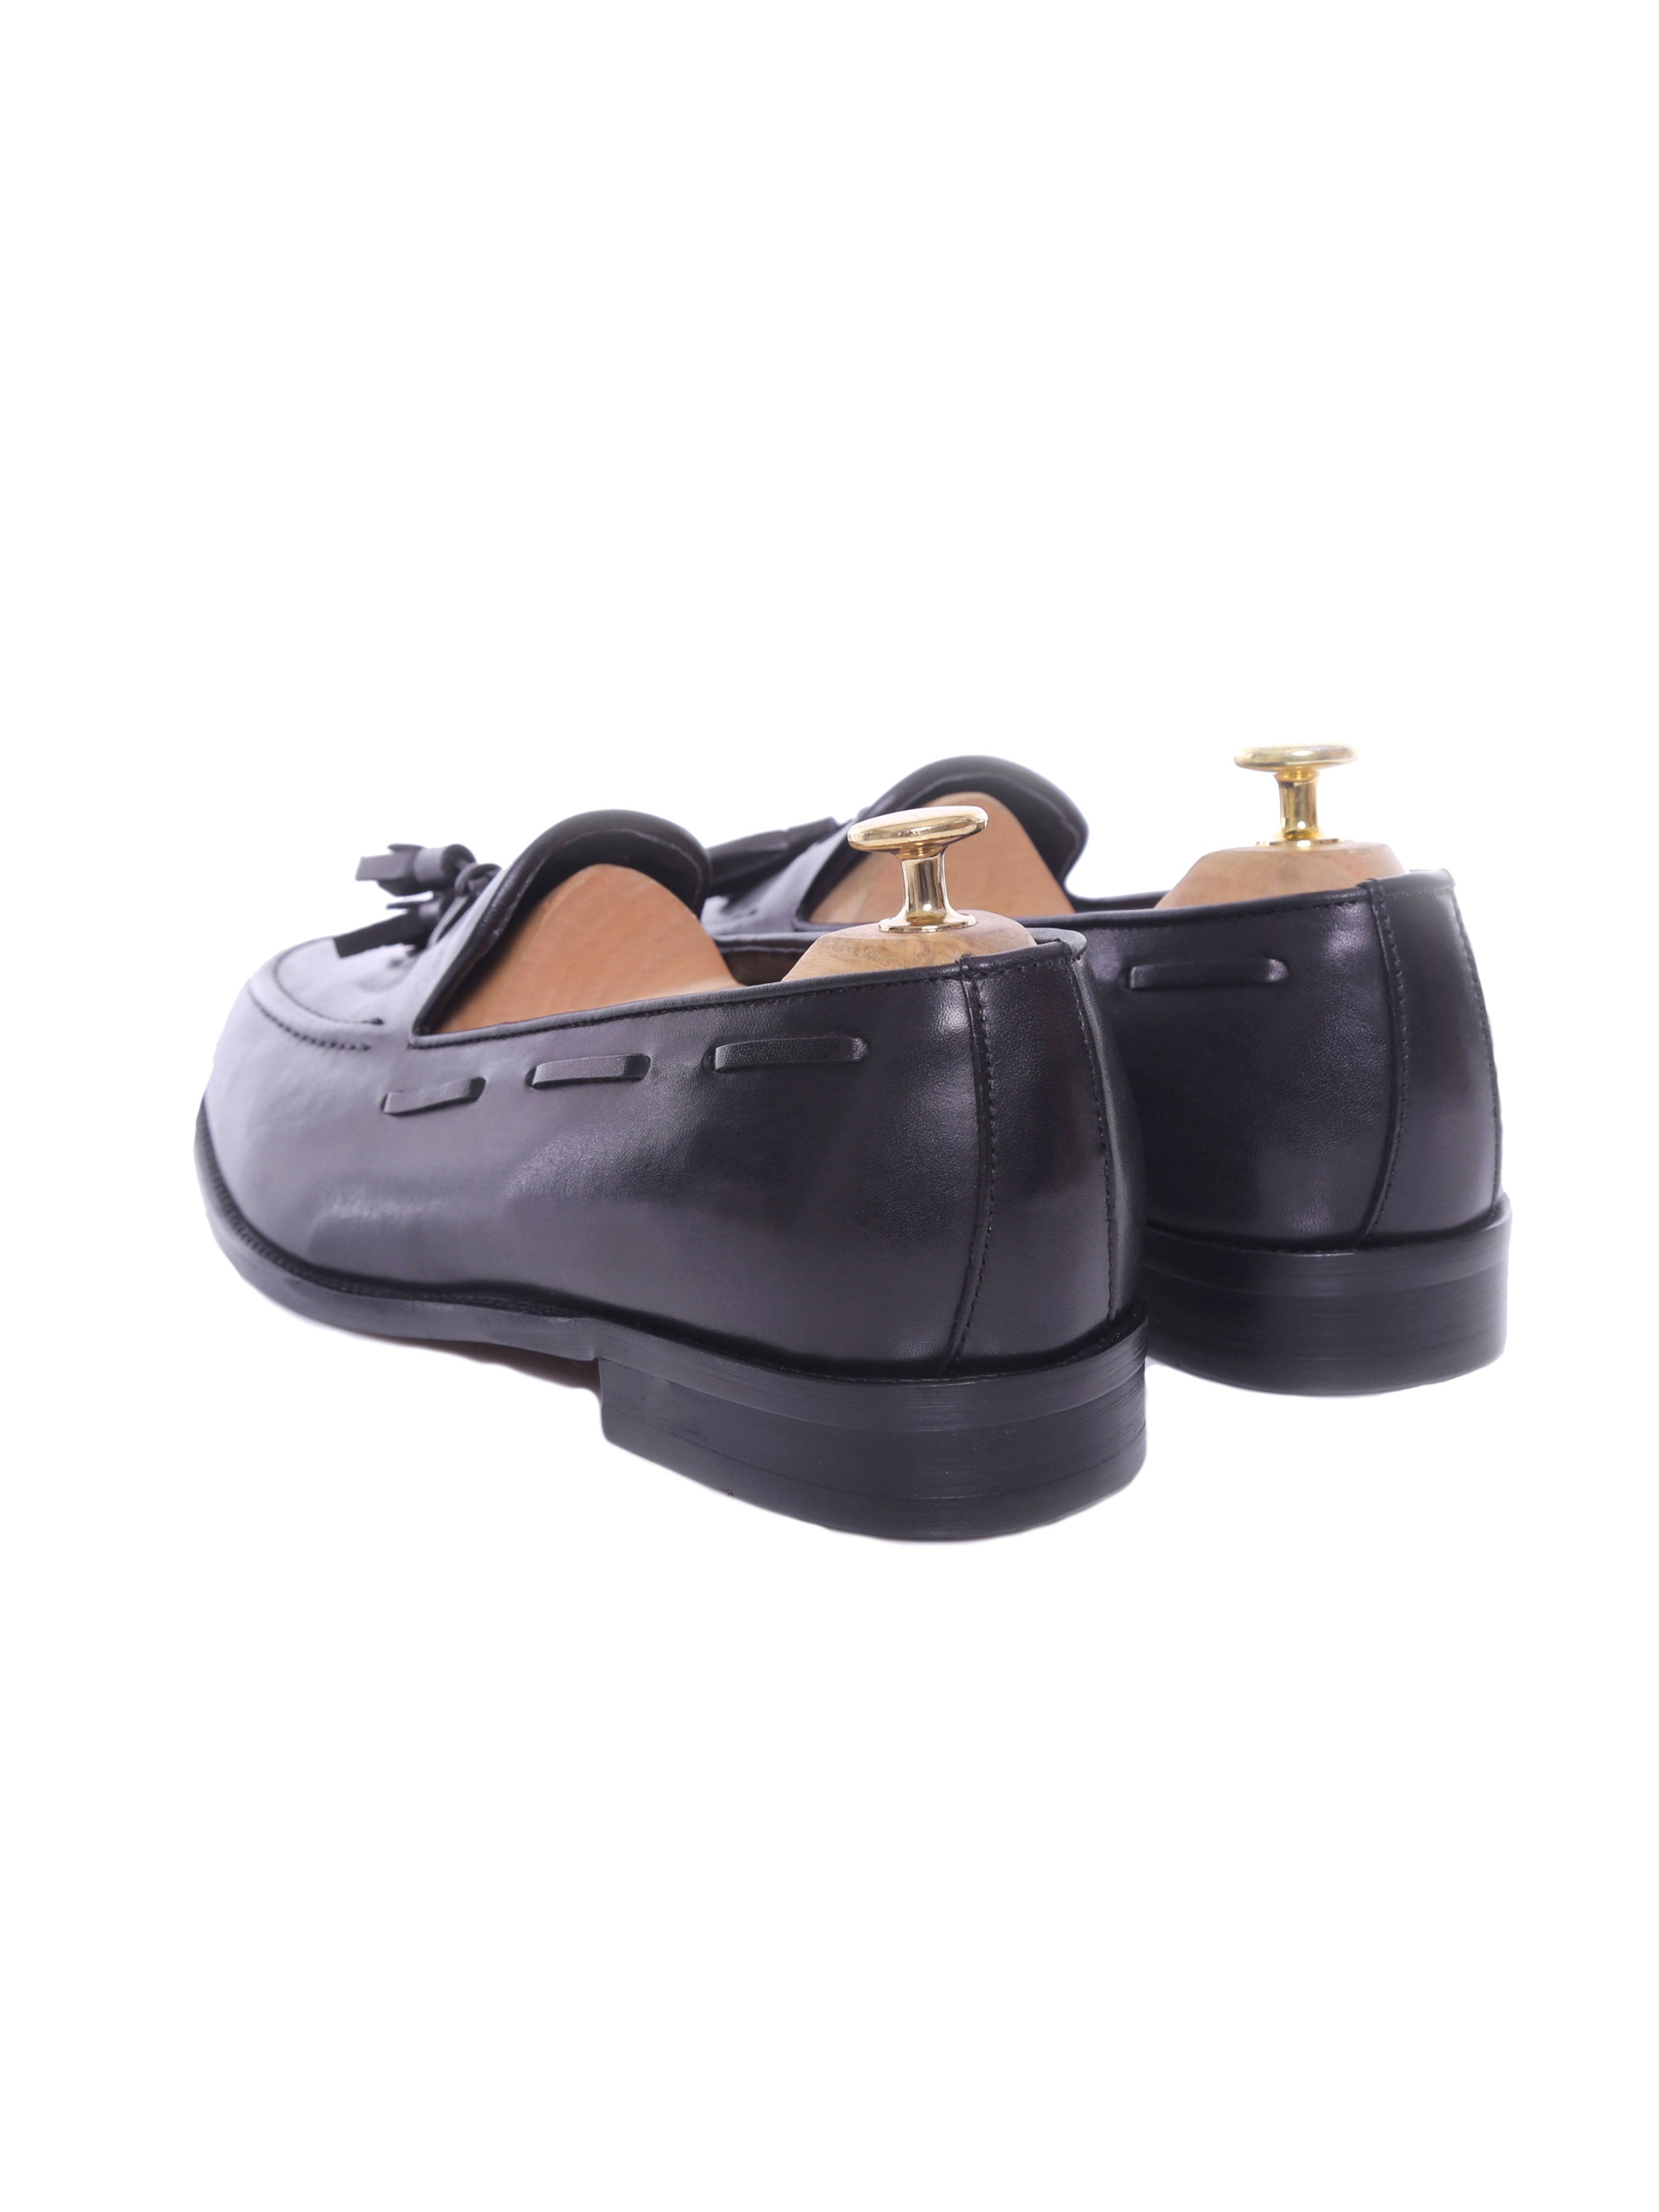 Tassel Loafer - Black Grey (Hand Painted Patina) - Zeve Shoes